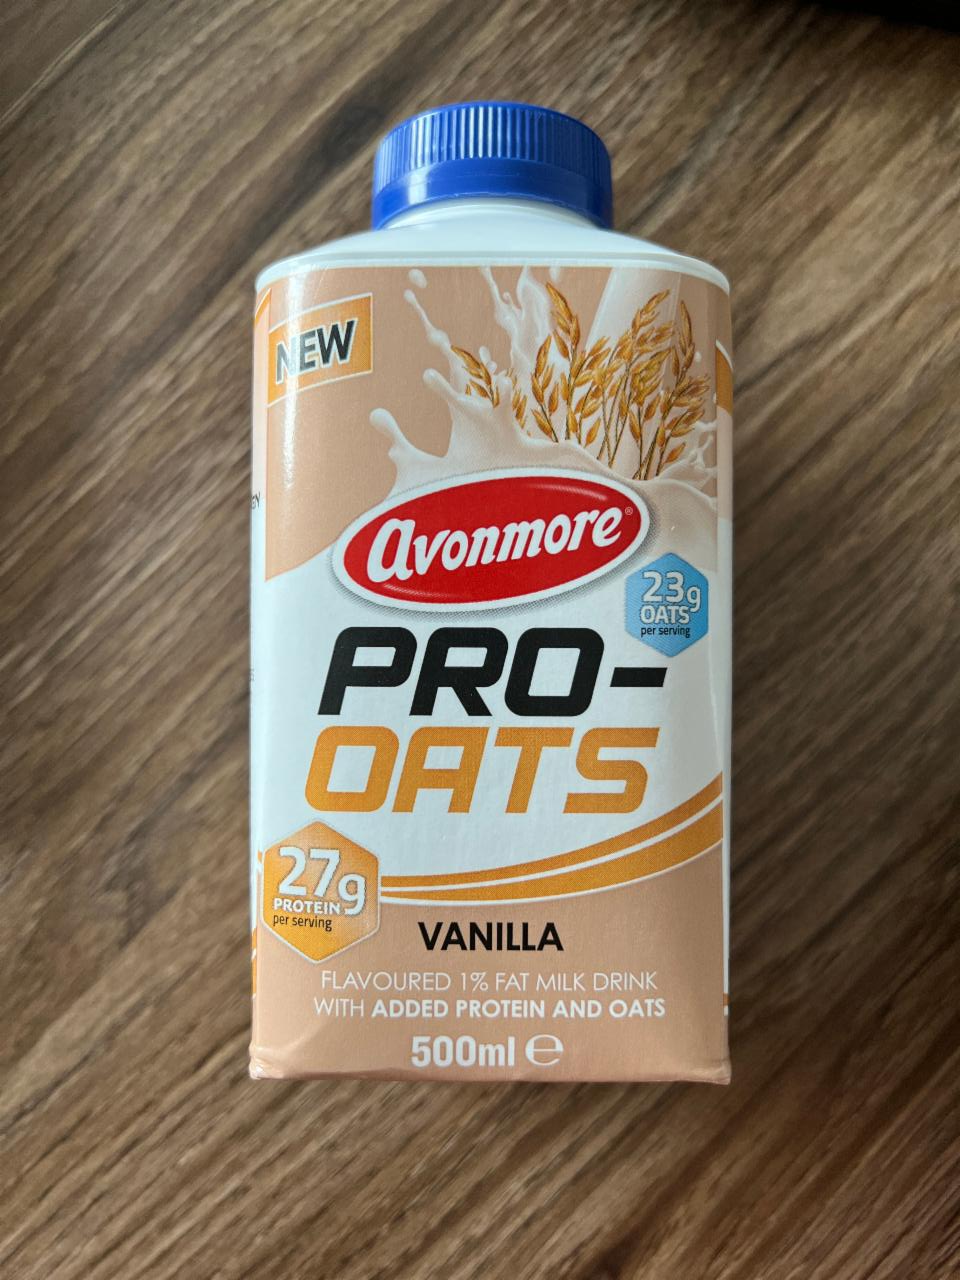 Fotografie - Pro-oats Vanilla Avonmore